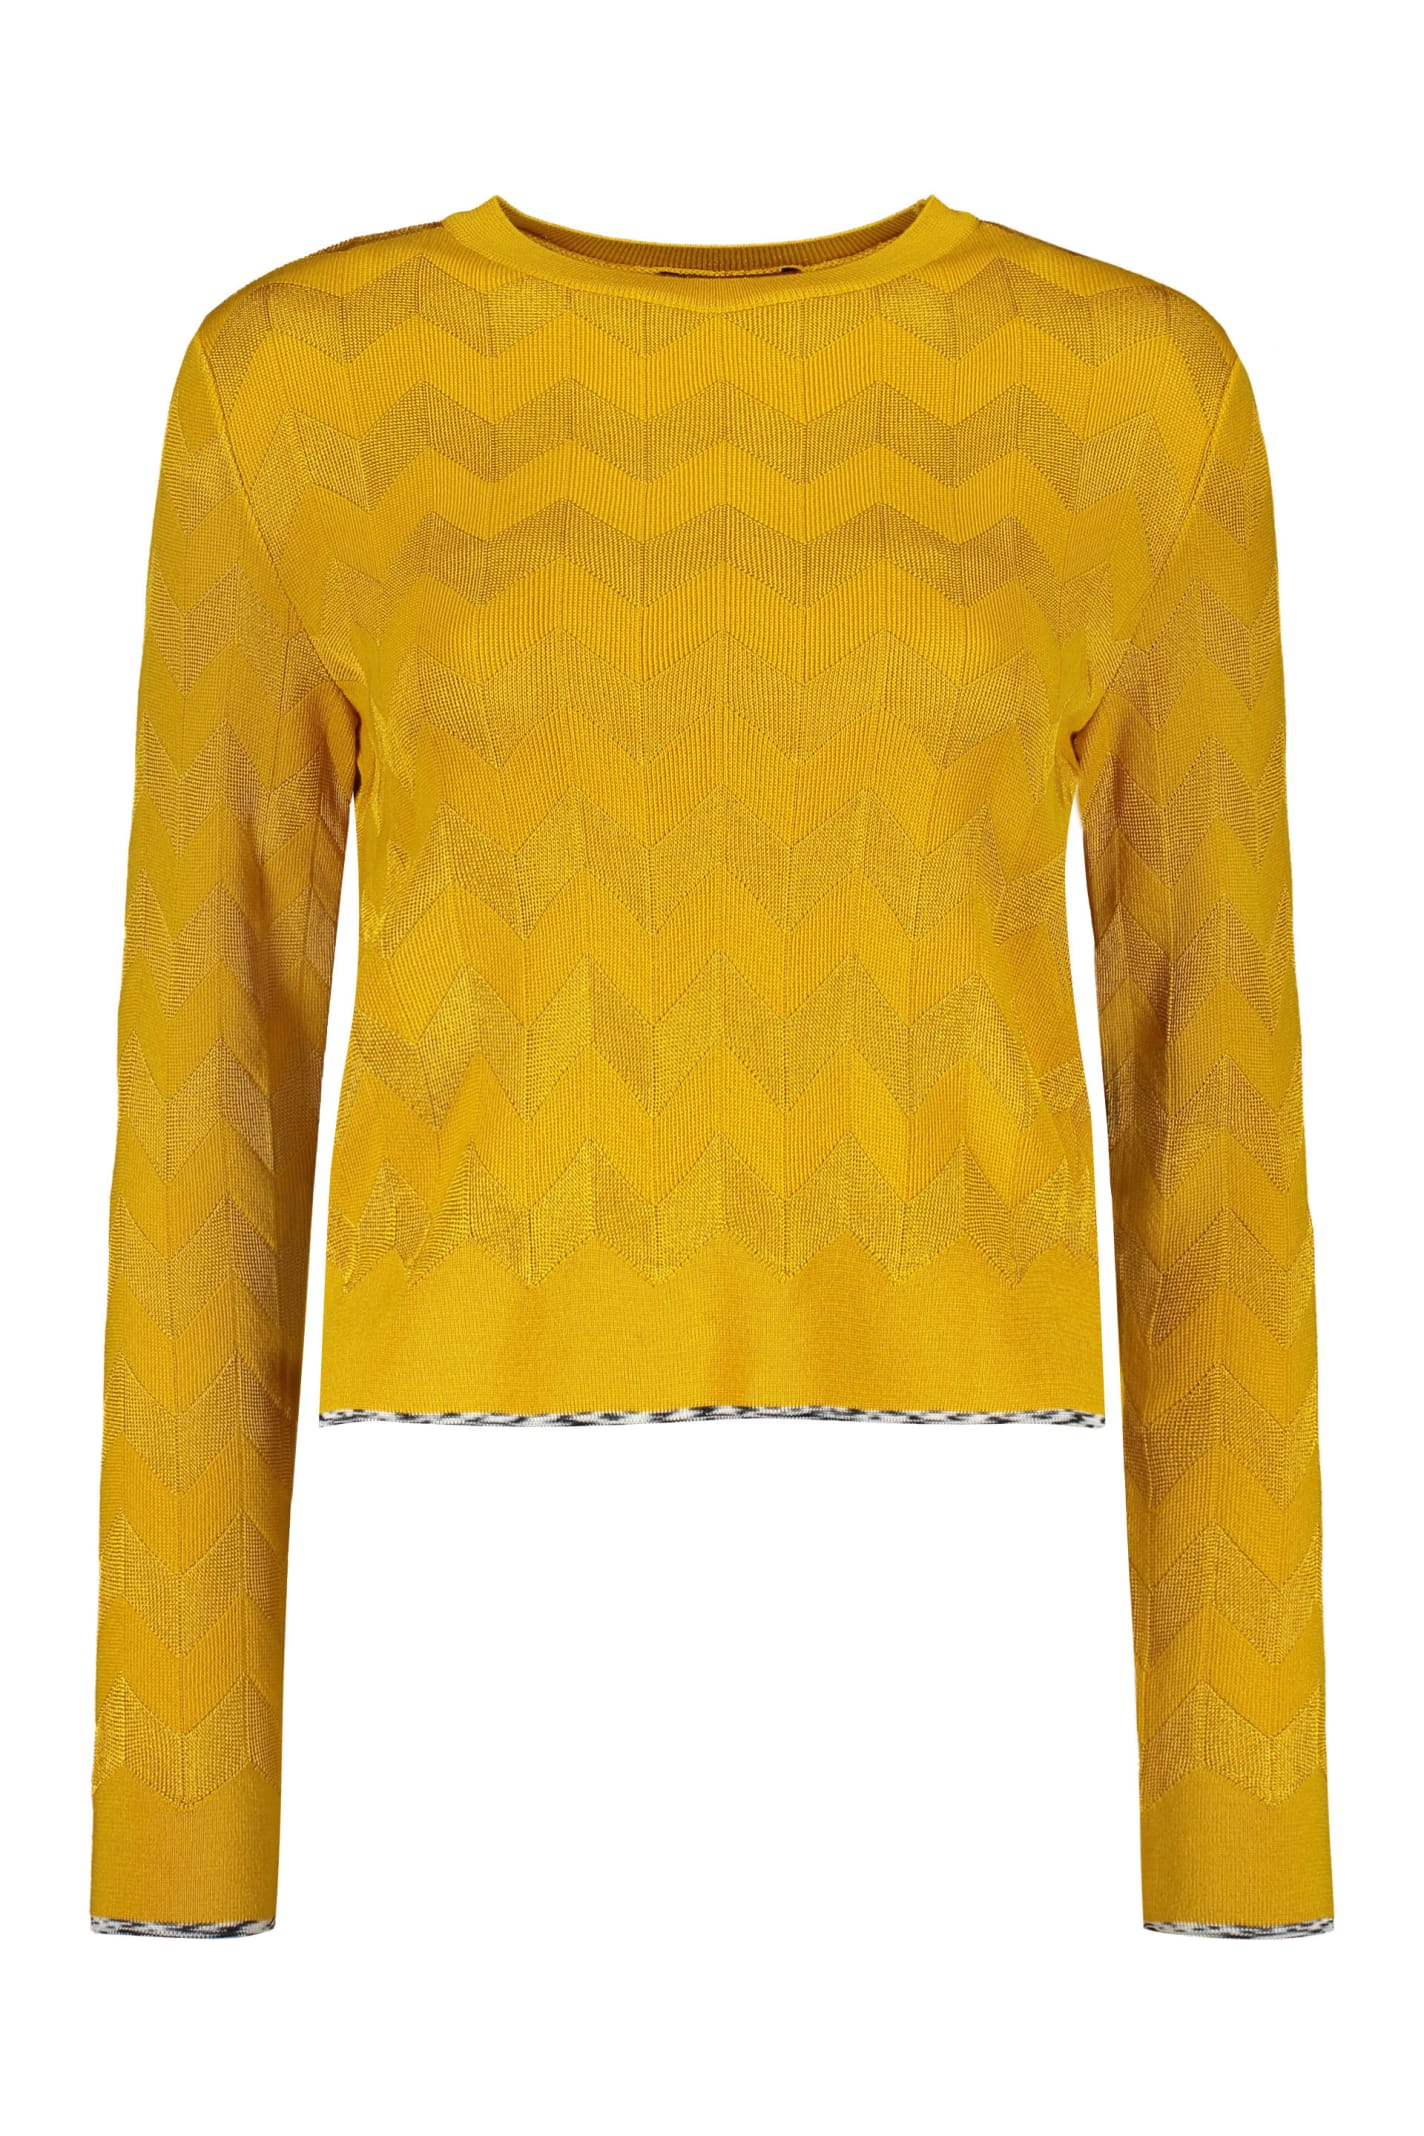 Missoni Wool Blend Sweater In Mustard